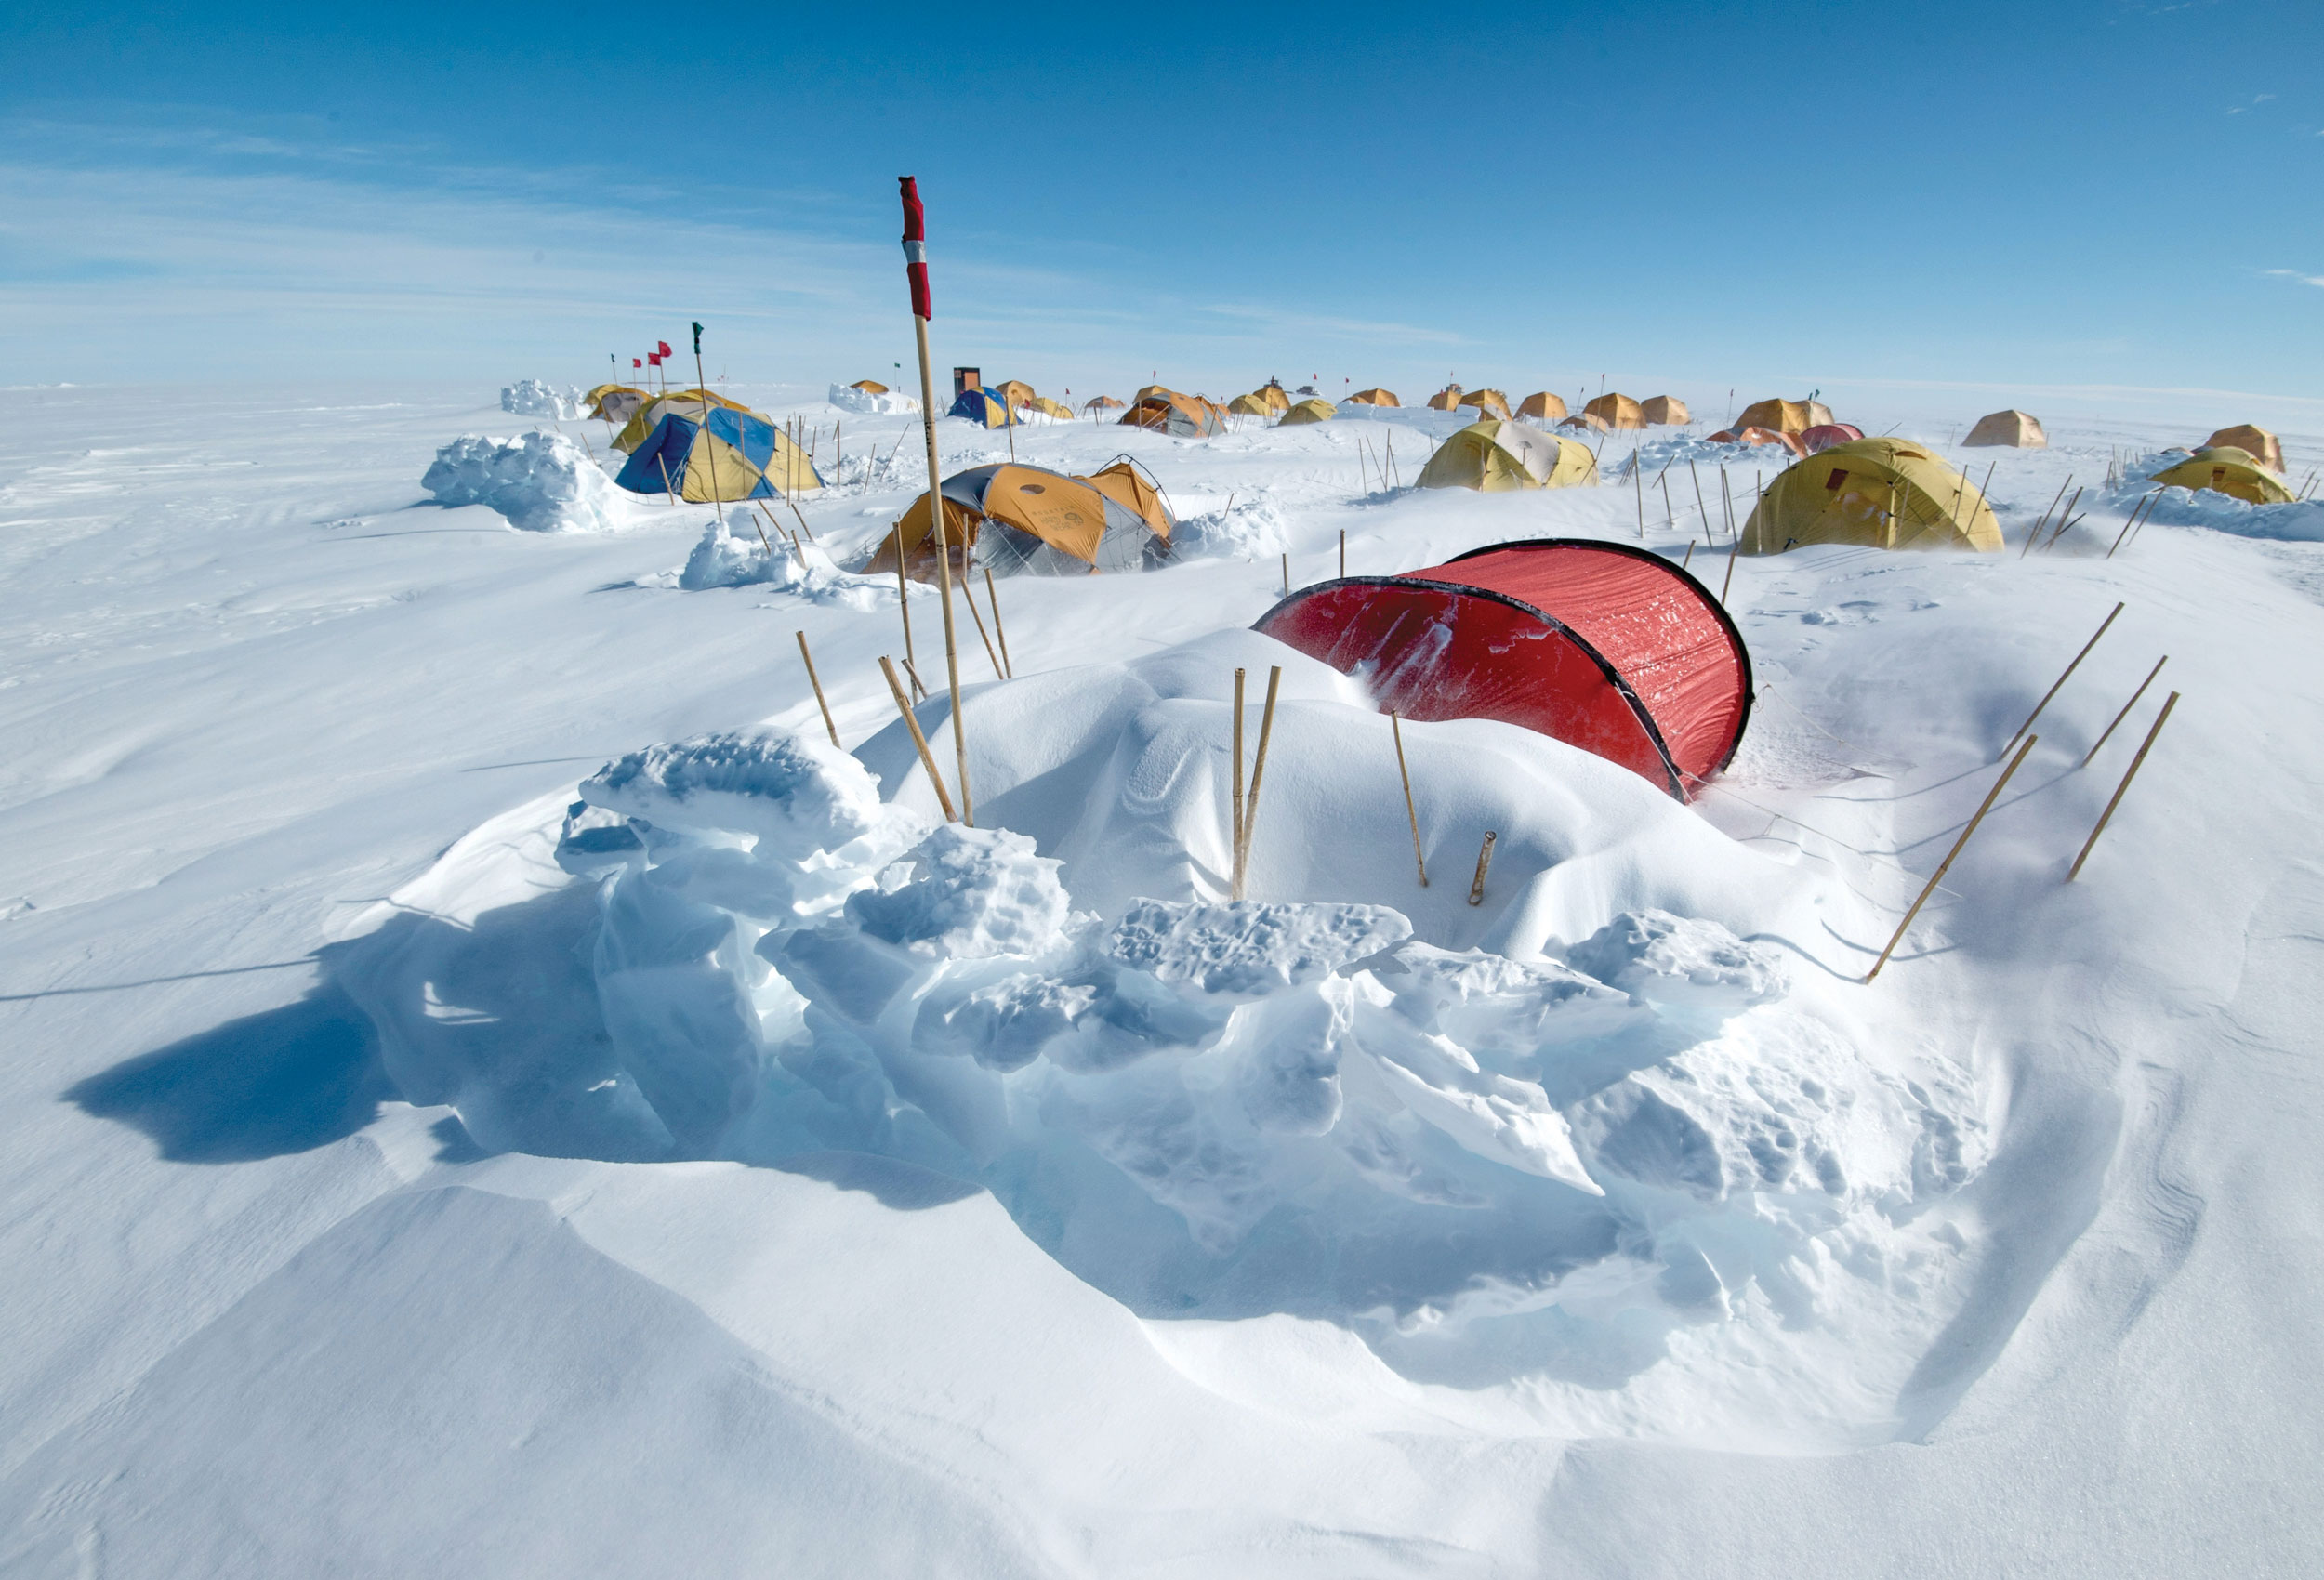 Tents semi-buried in snow in Antarctica